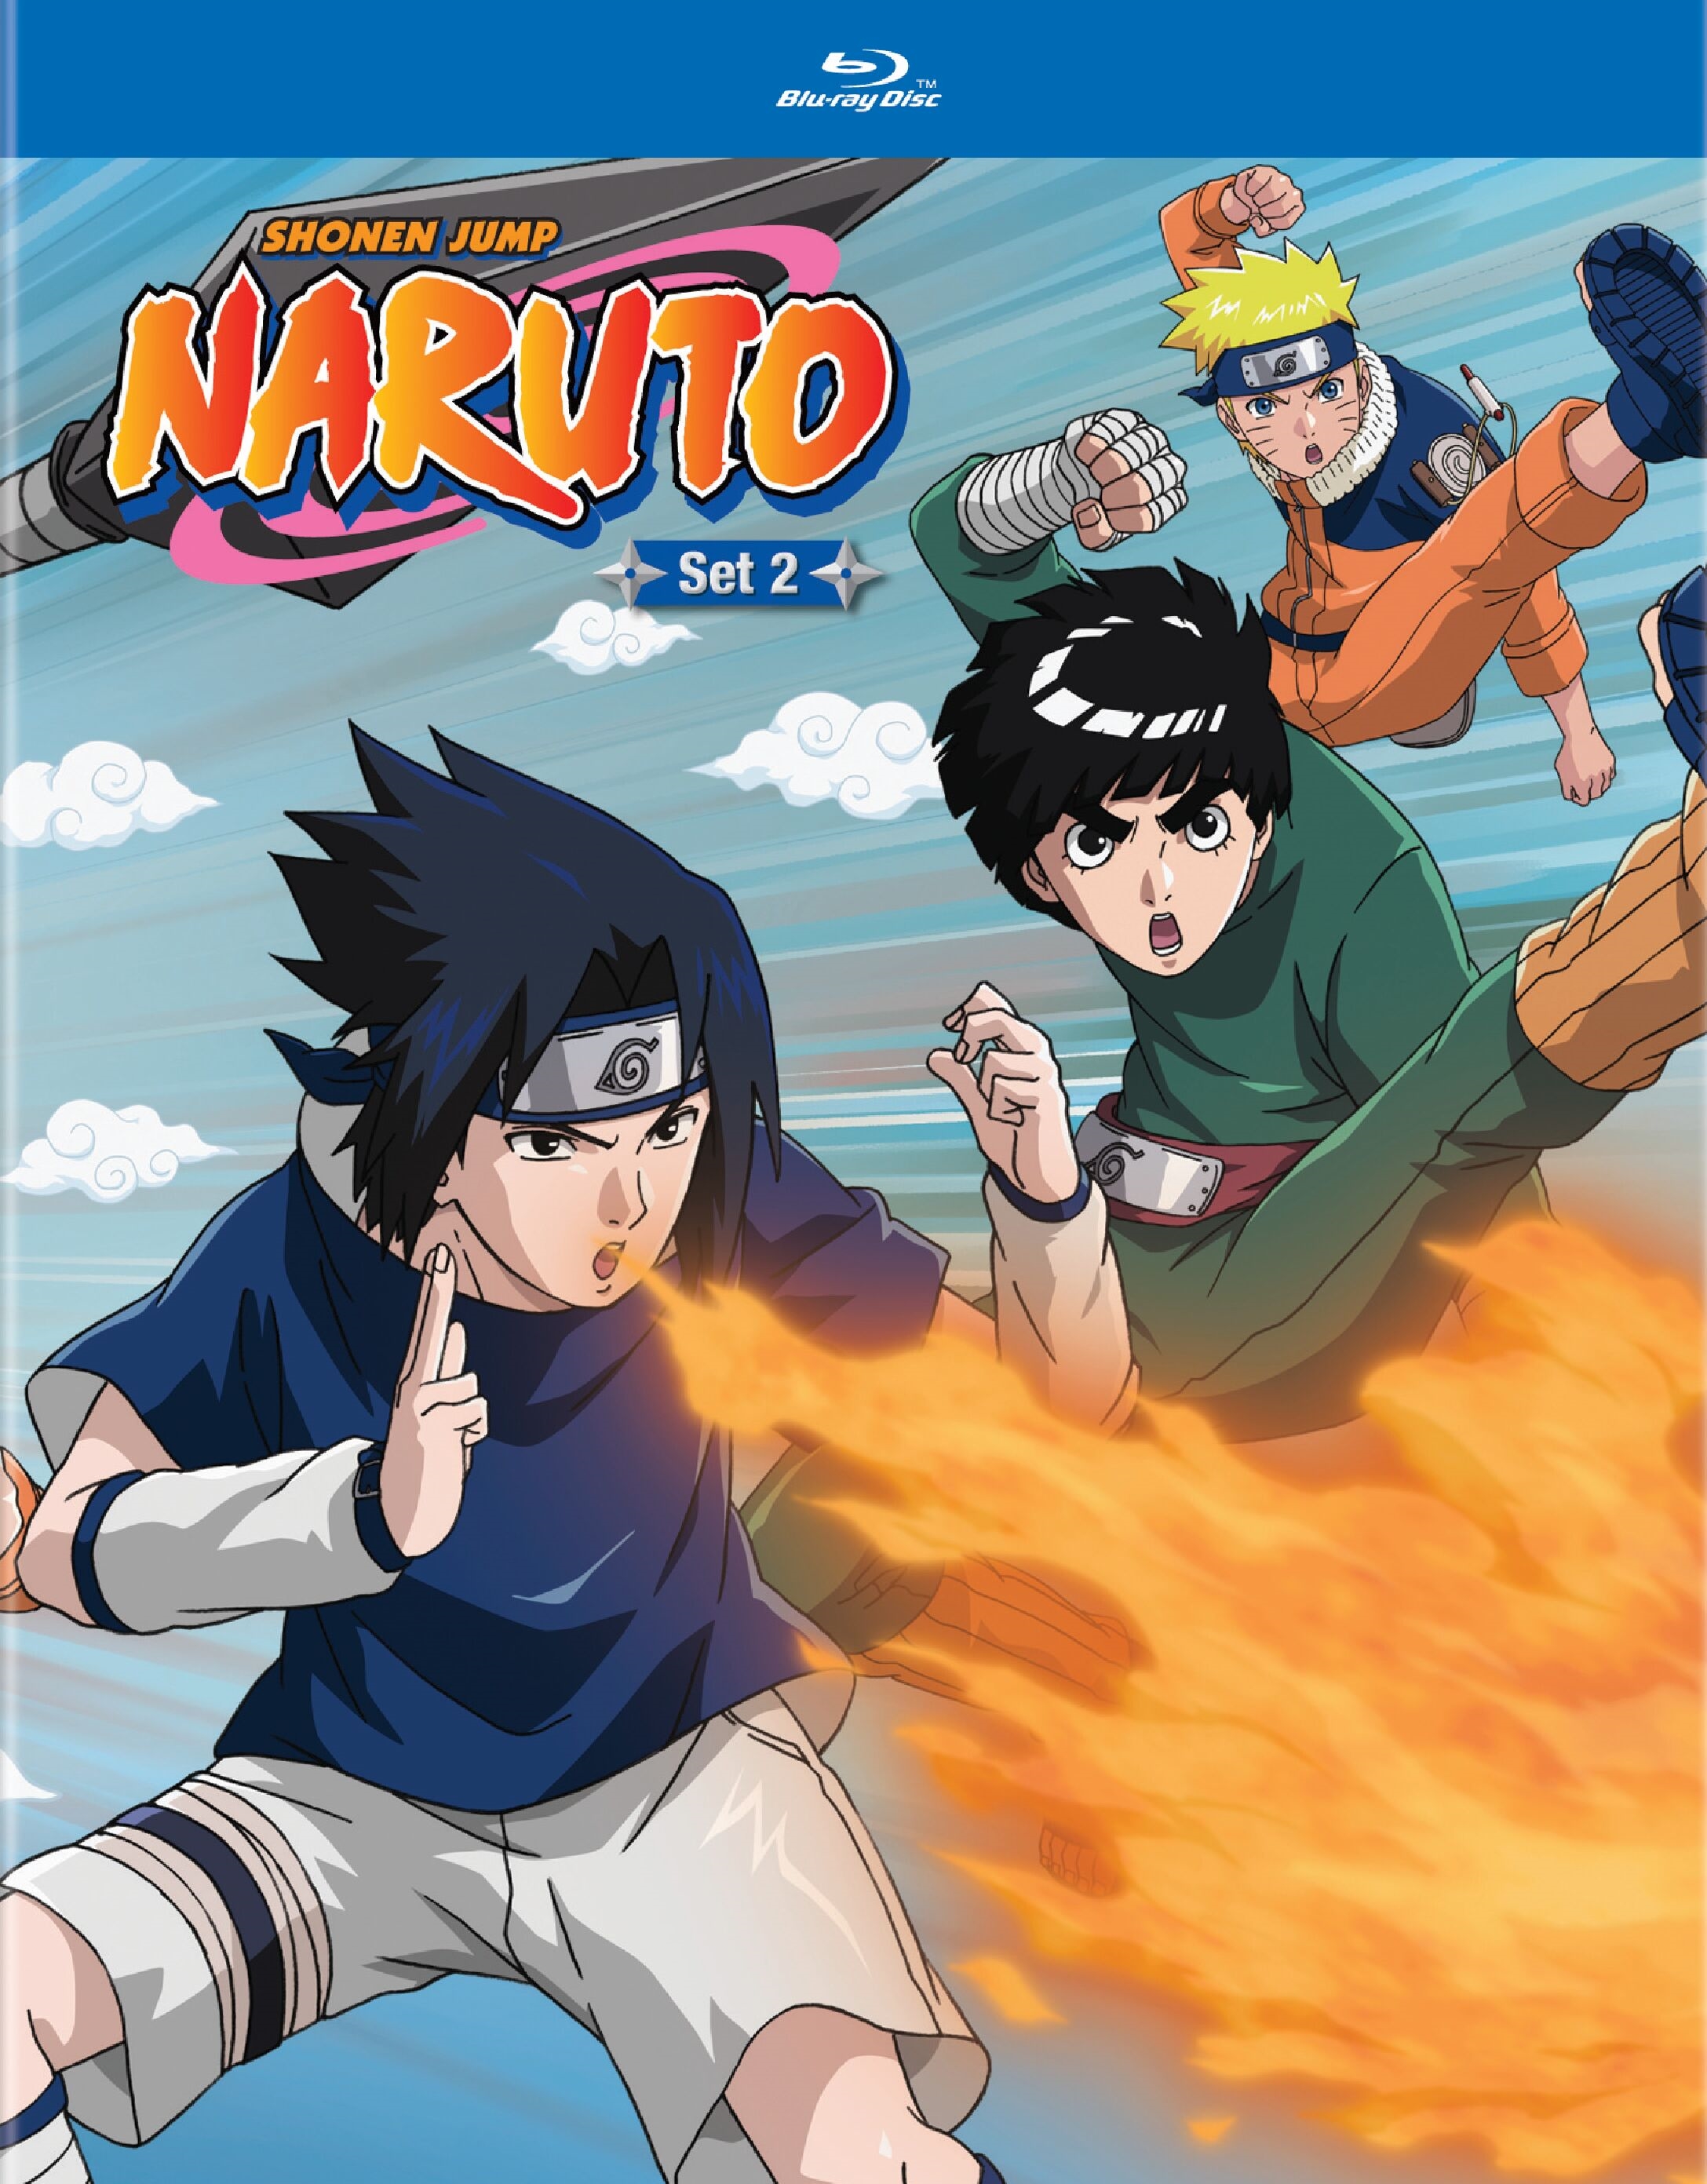 Naruto: Shippuden Box Set 1 [3 Discs] - Best Buy